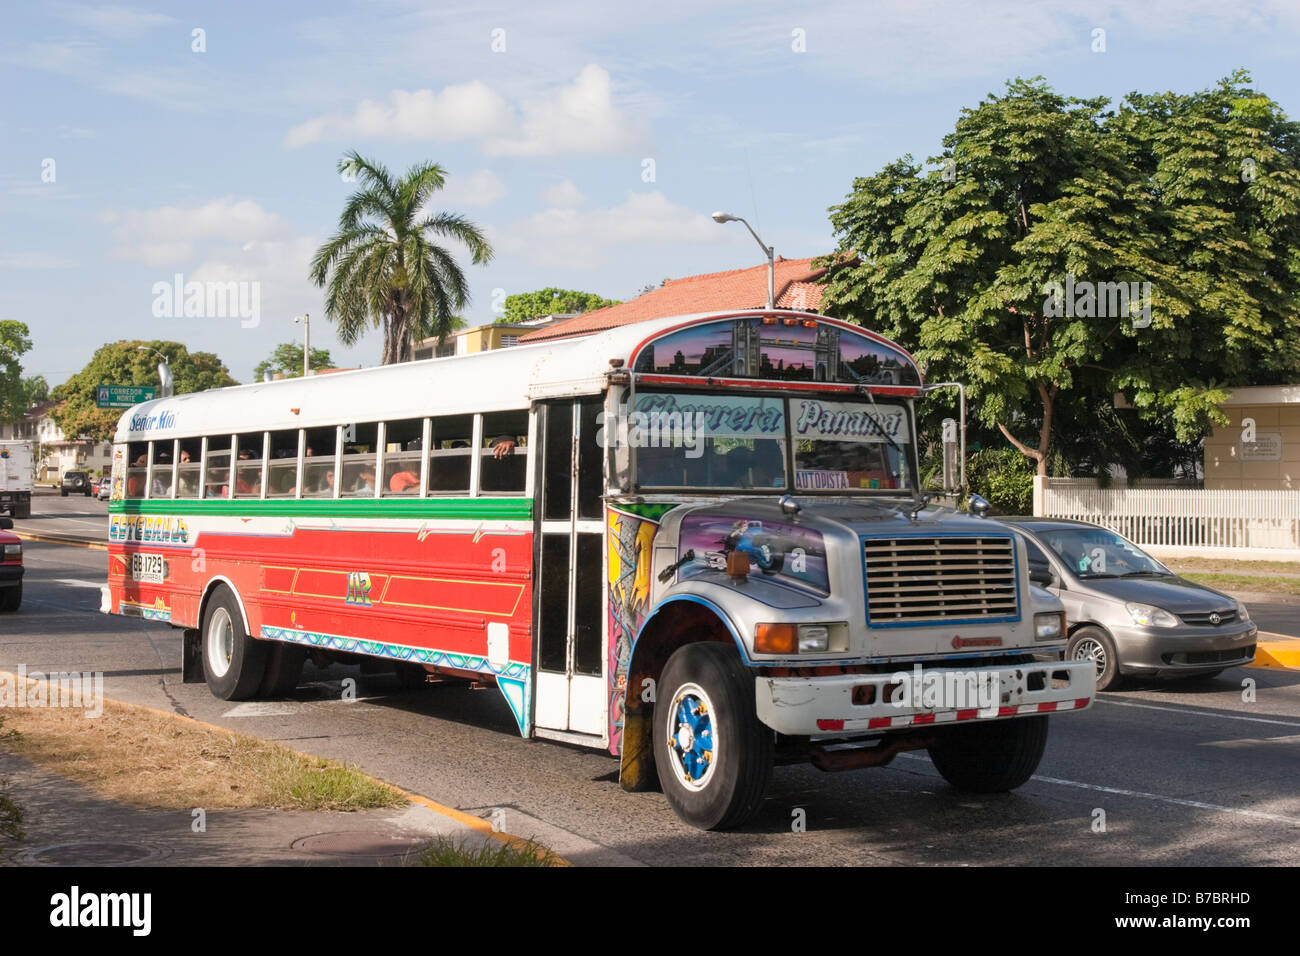 Diablo Rojo bus. Balboa, Panama City, Republic of Panama, Central America Stock Photo